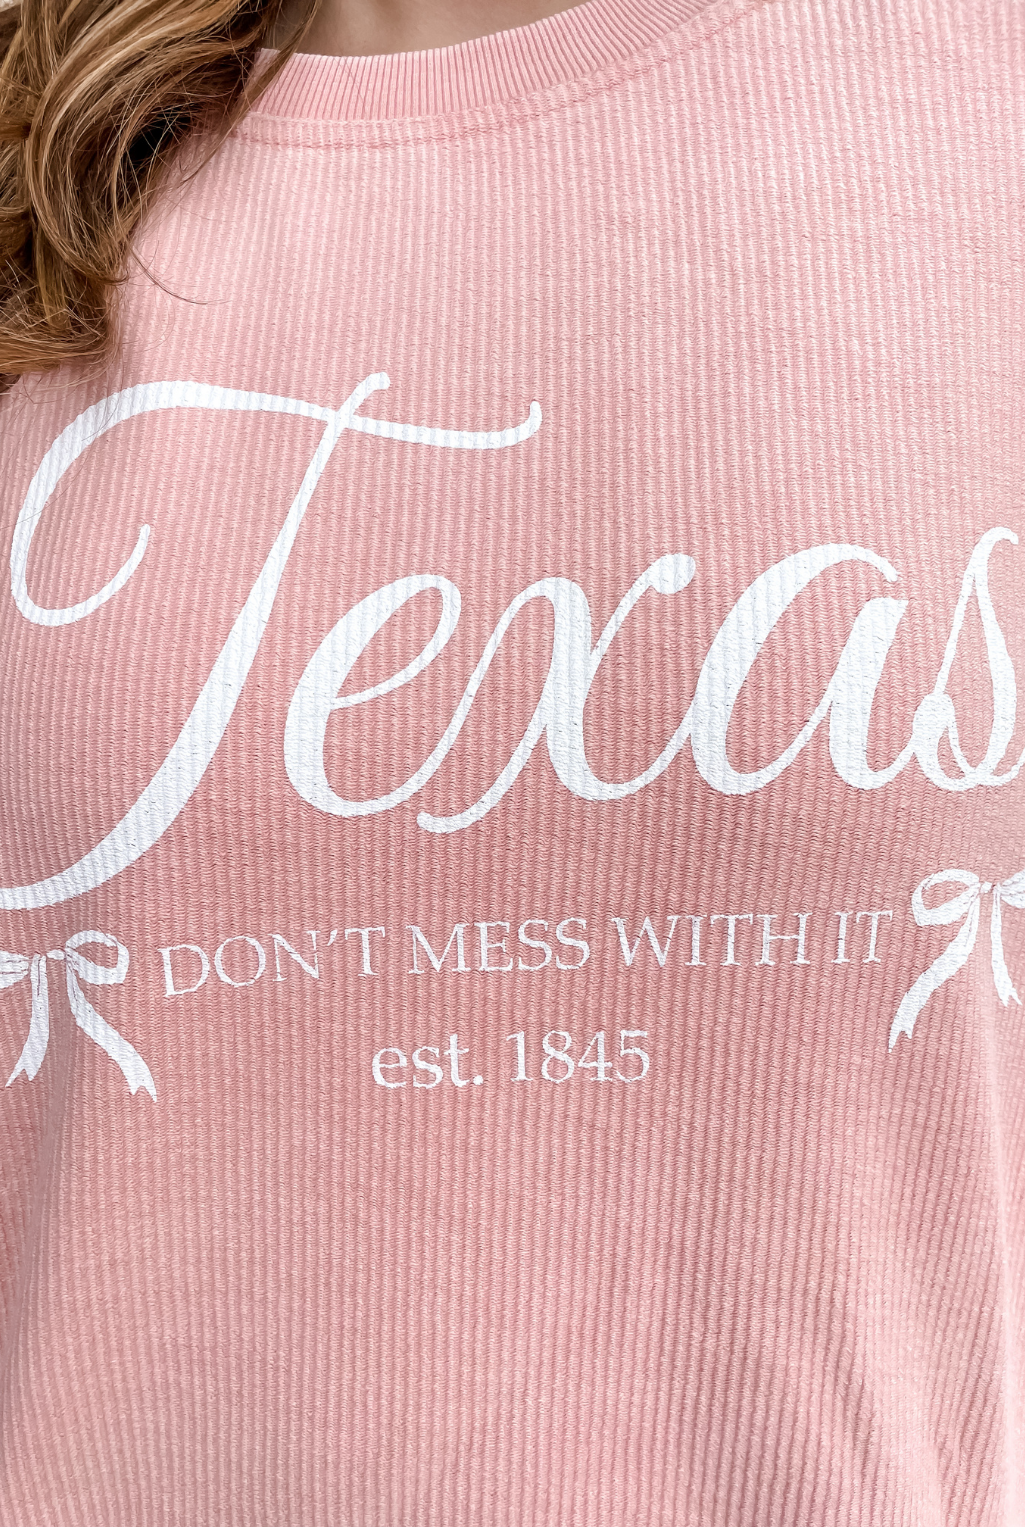 Texas + Bows Sweatshirt